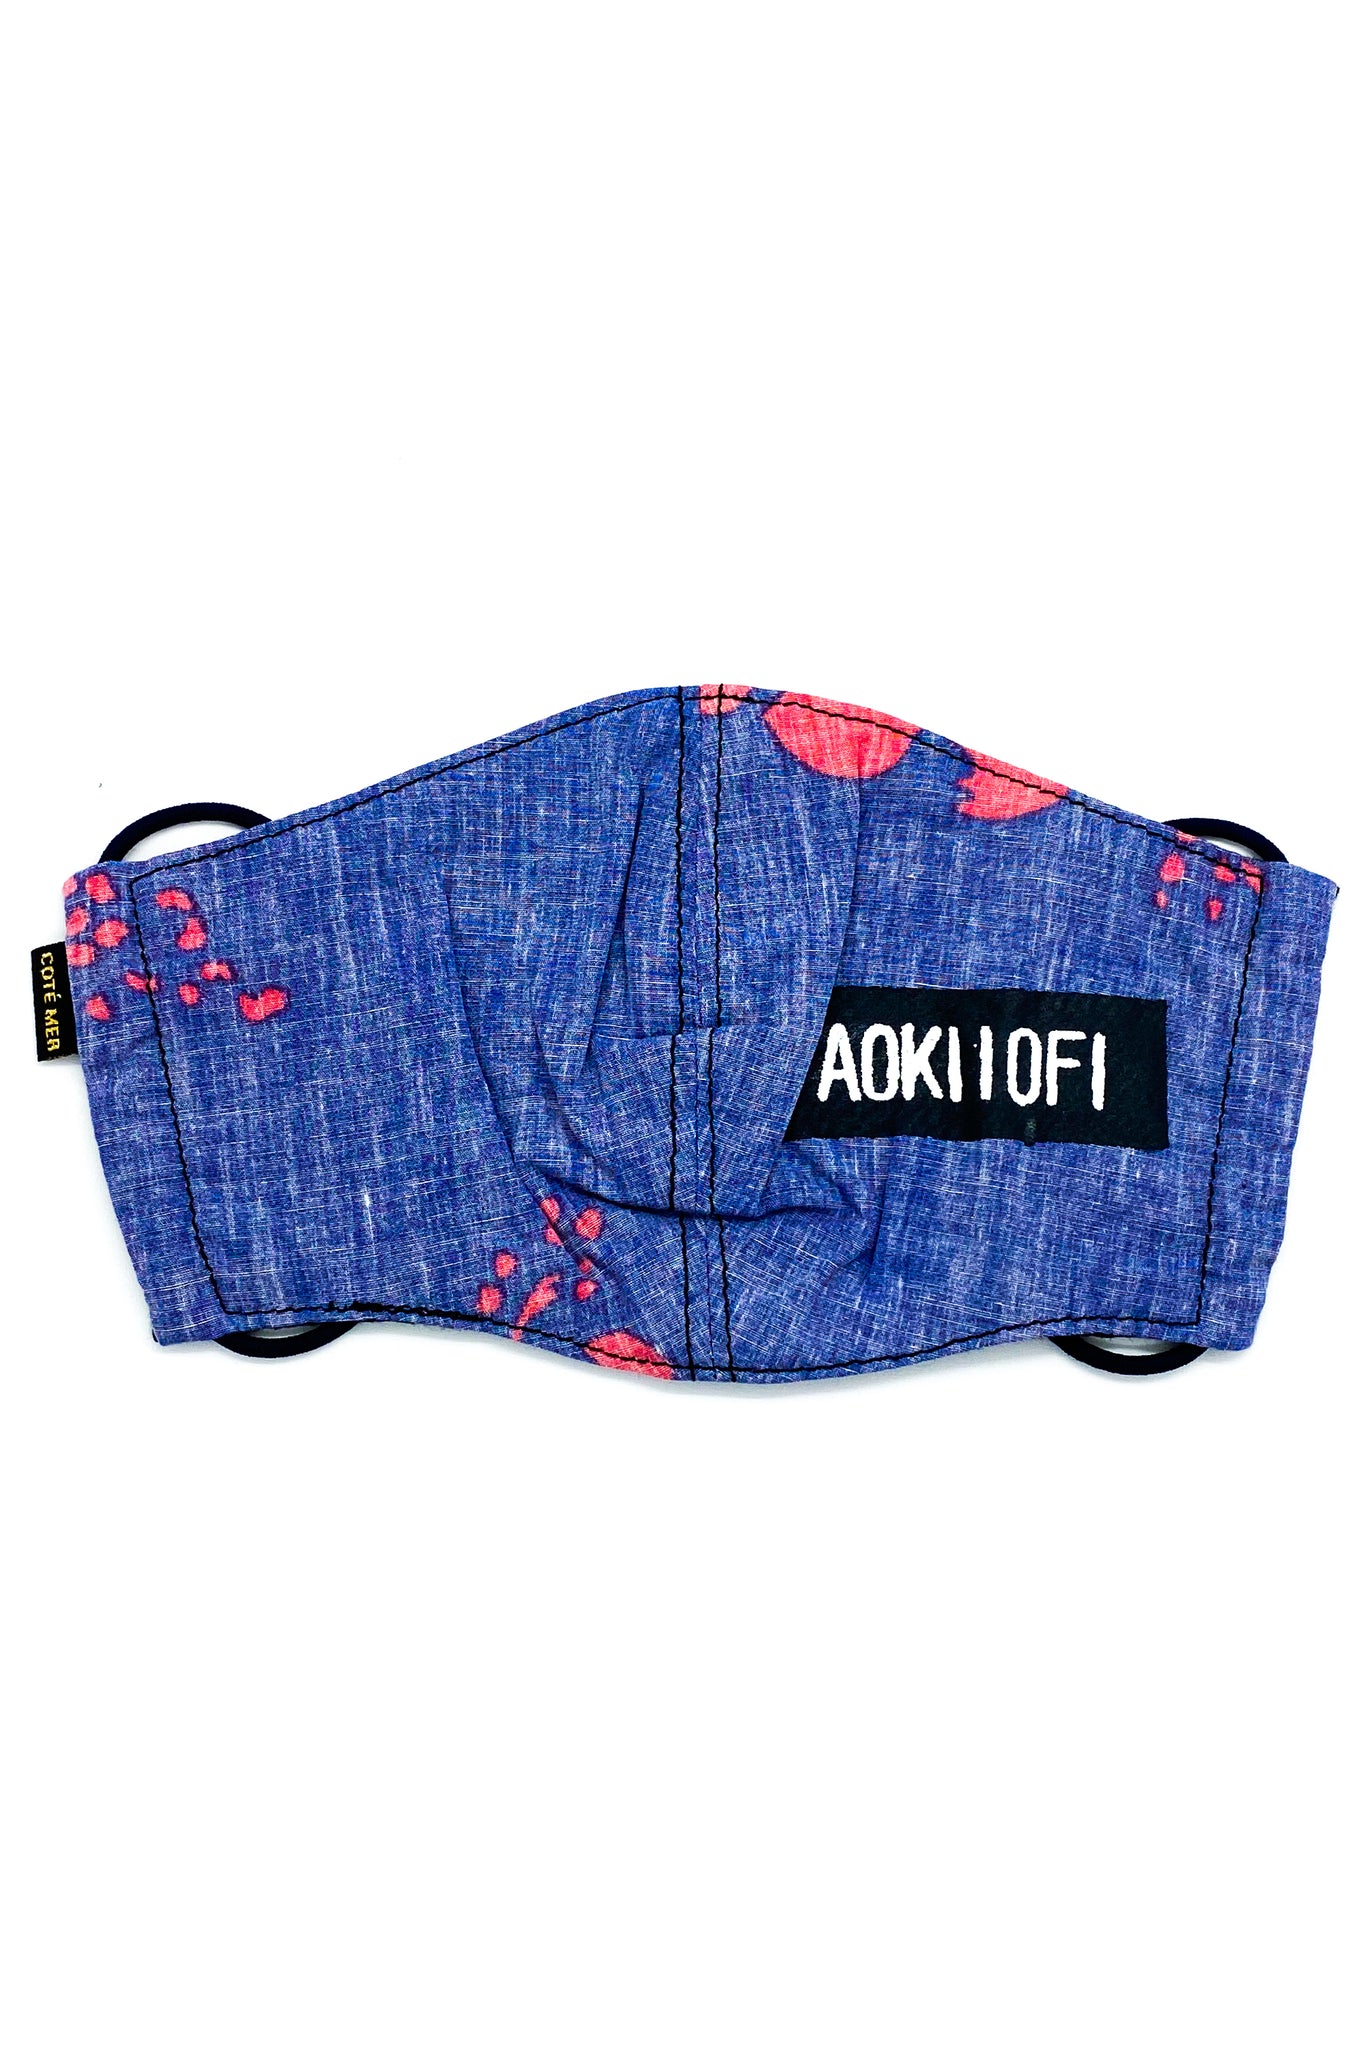 Aoki 1 of 1 Mask #416